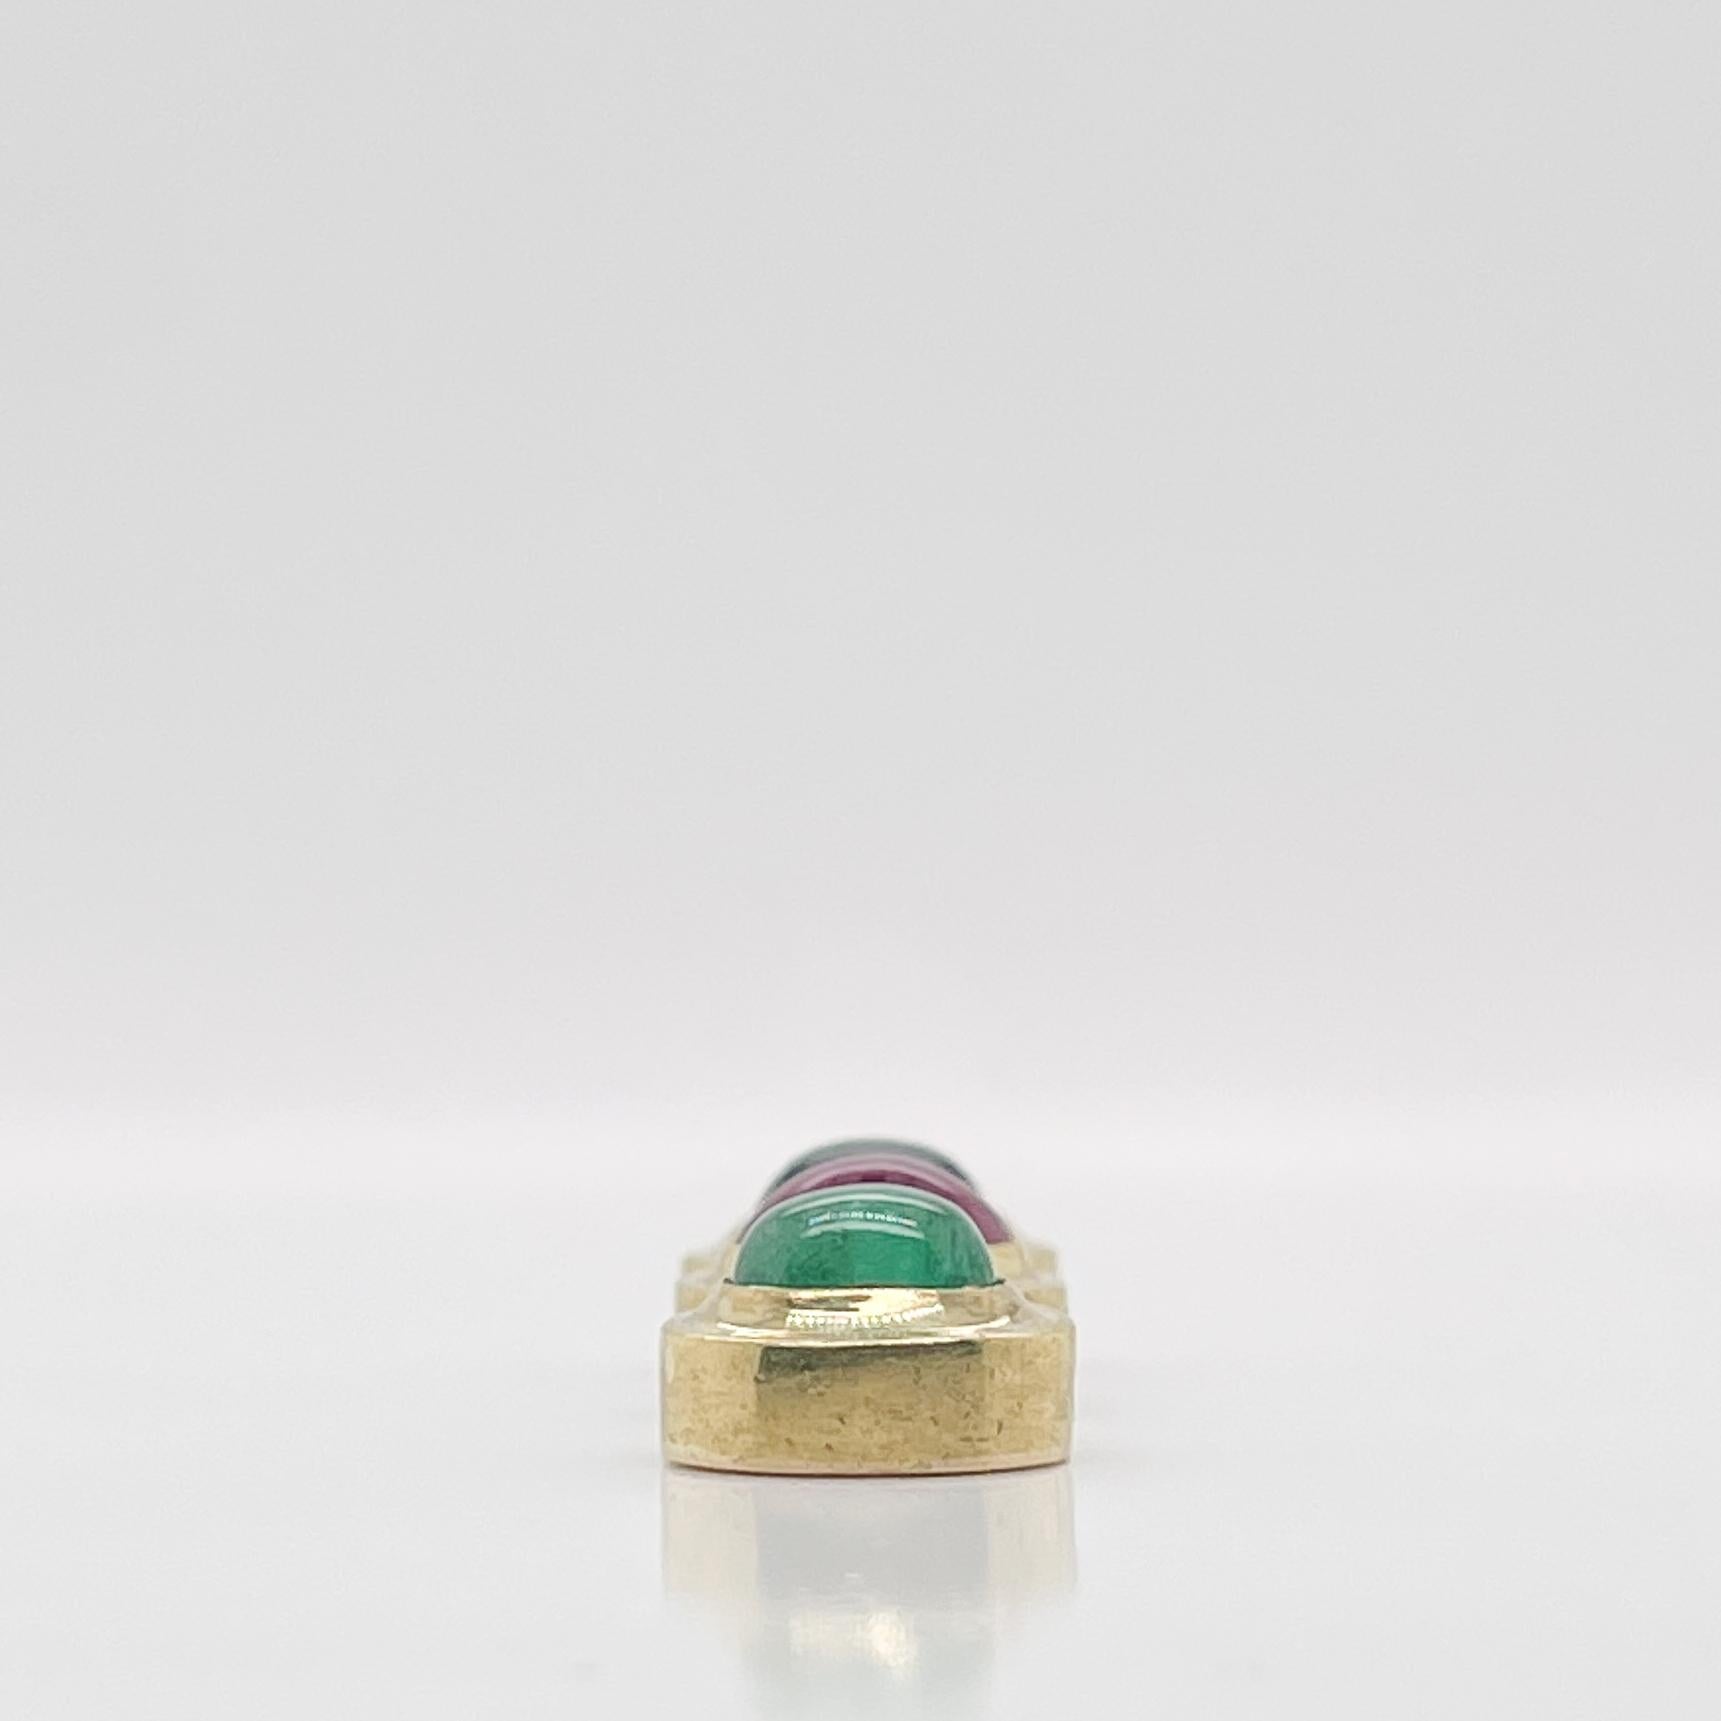 Christopher Walling Modernist Gold & Gemstone 'Traffic Light' Pendant Necklace For Sale 1